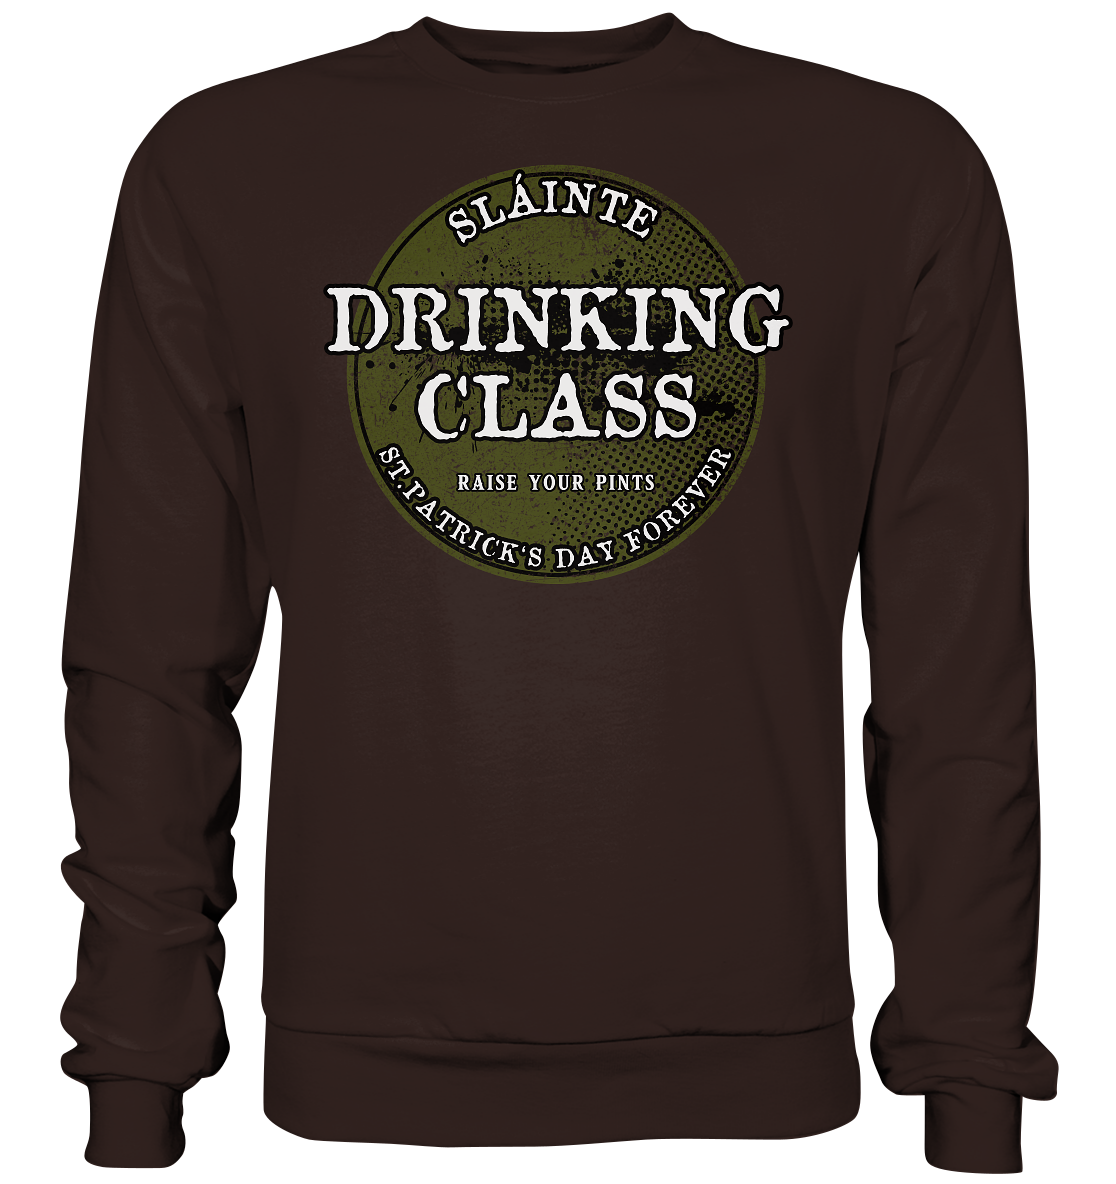 Drinking Class "St.Patrick's Day Forever" - Basic Sweatshirt